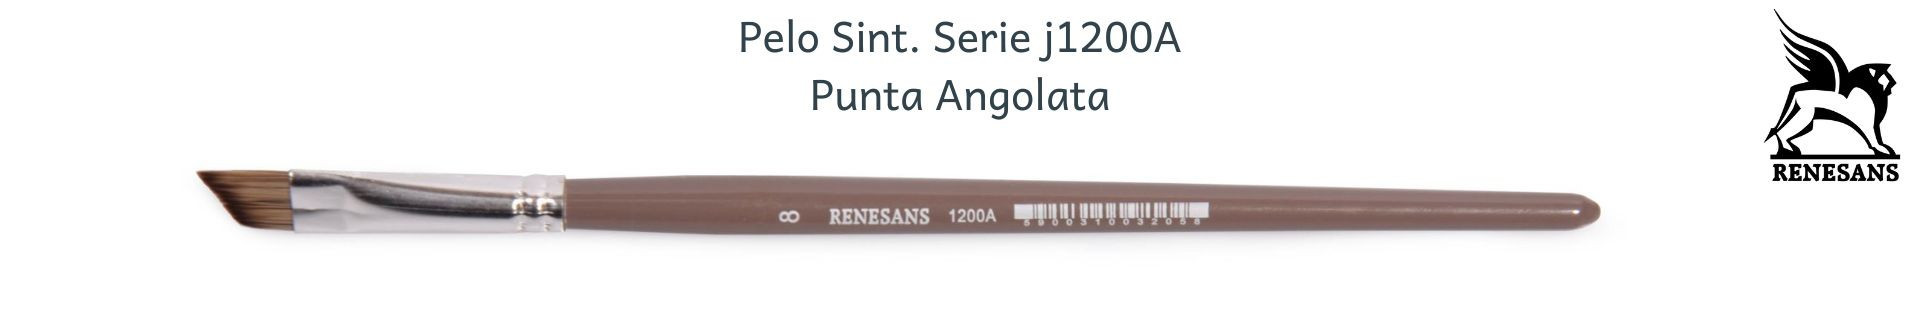 Pennelli Renesans Serie J1200A Angolati